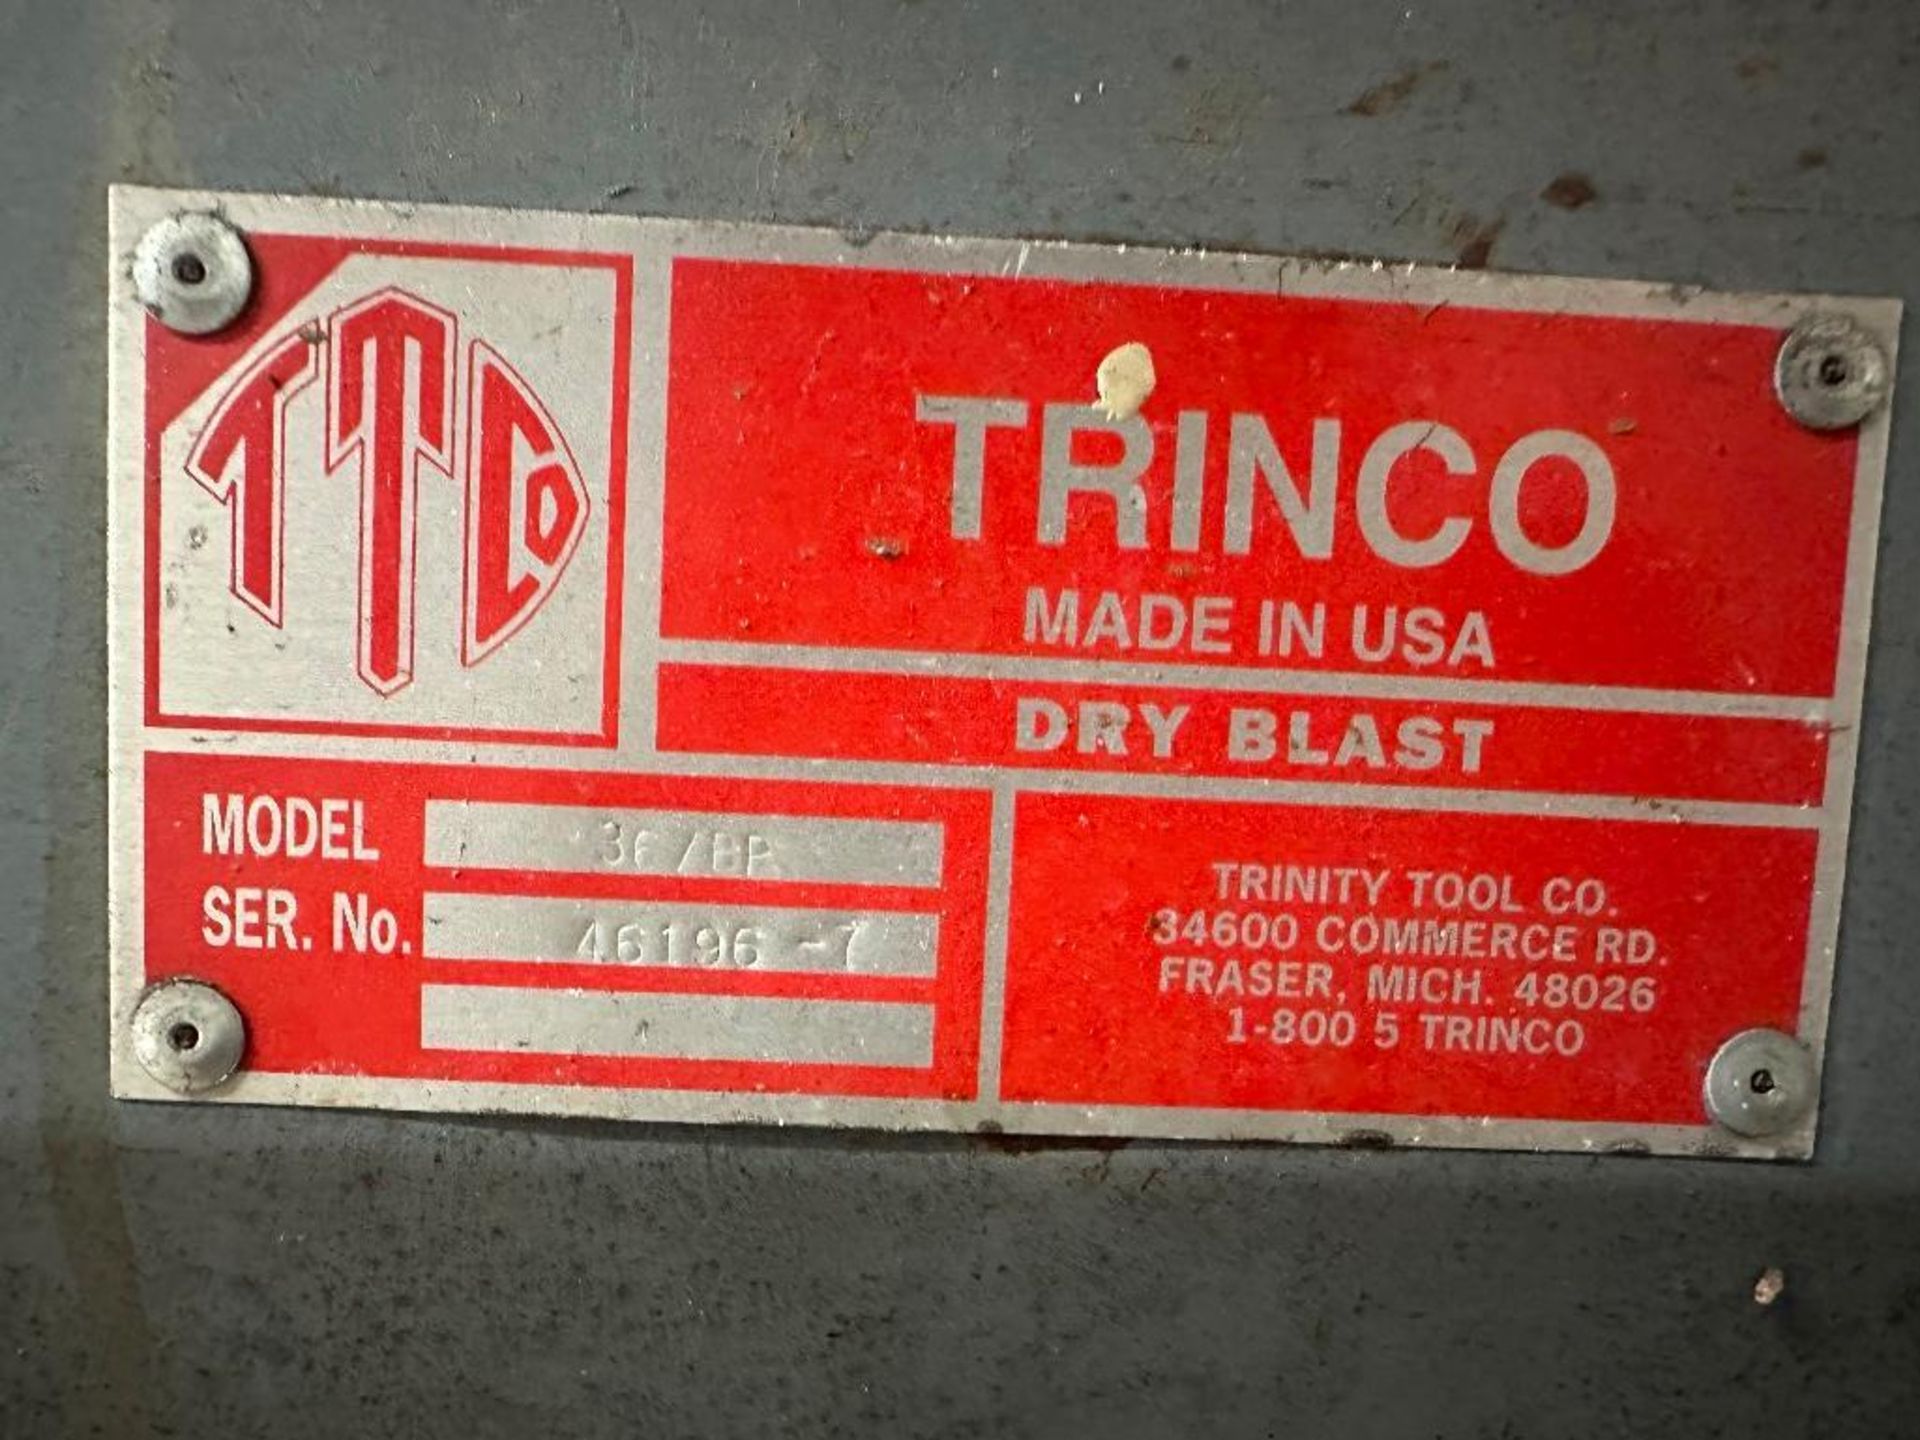 Trinco 367BP Sand Blaster, s/n 46196-7 - Image 4 of 4